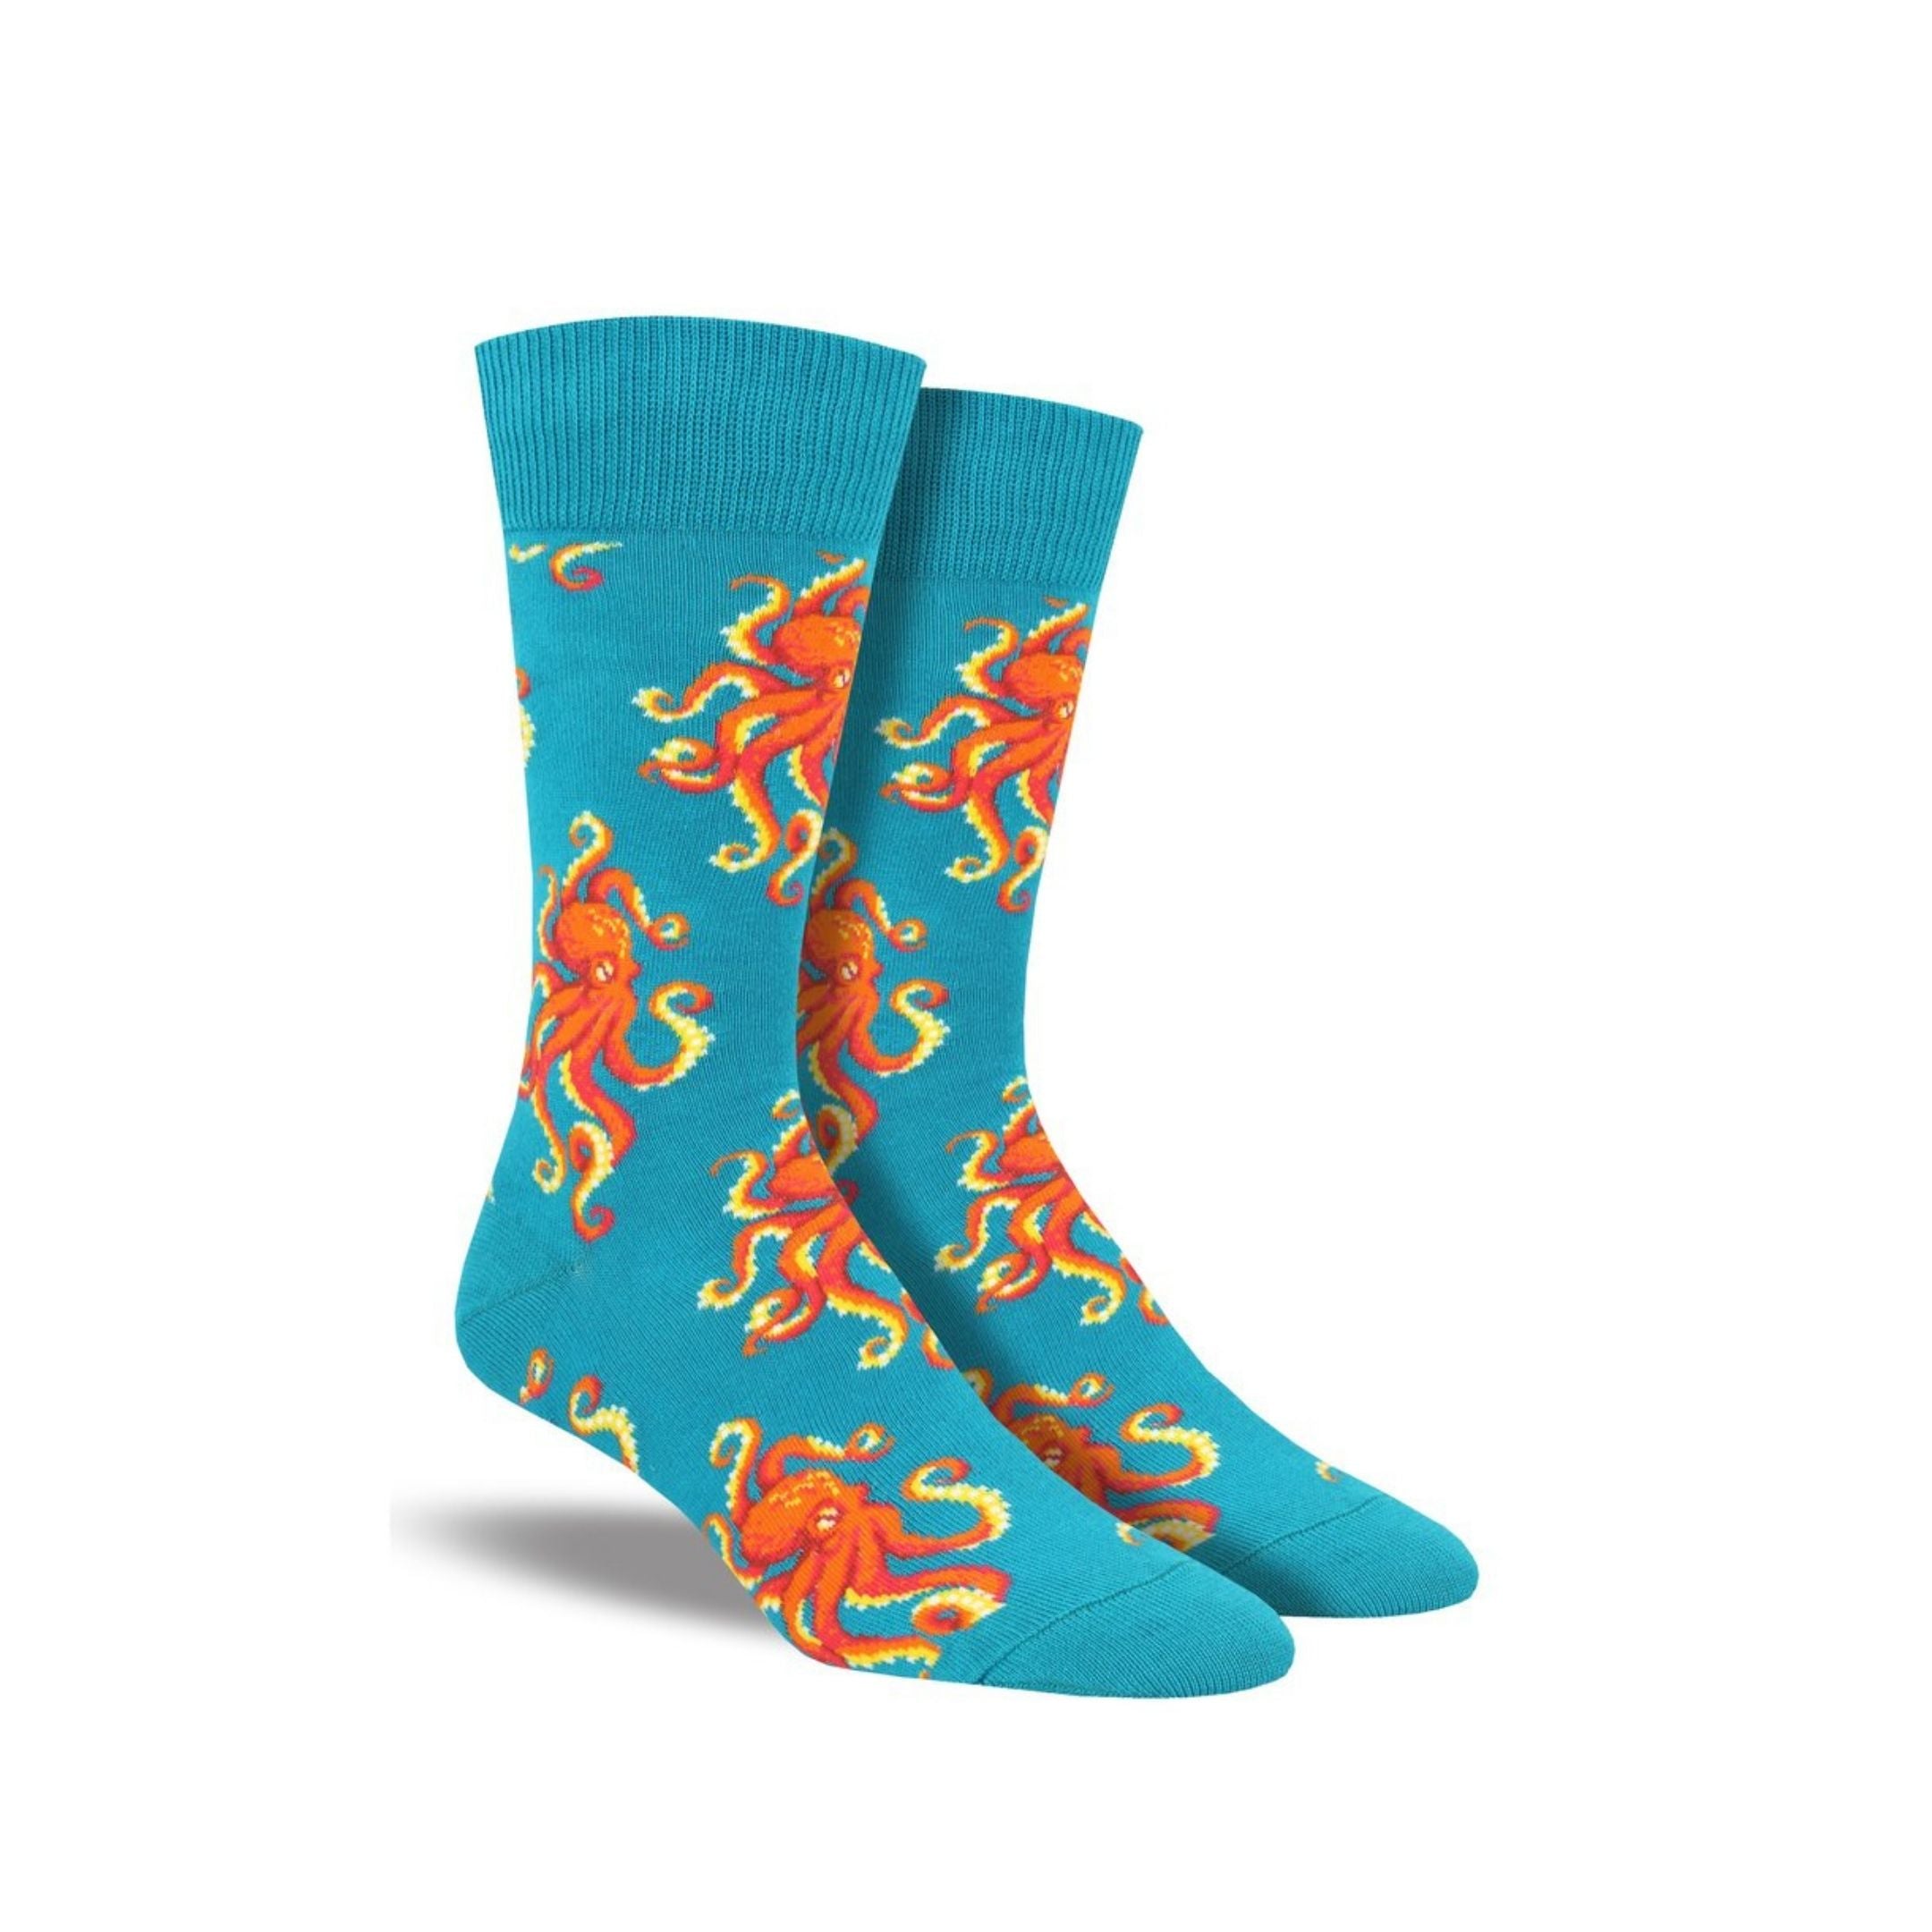 Blue socks with orange octopus